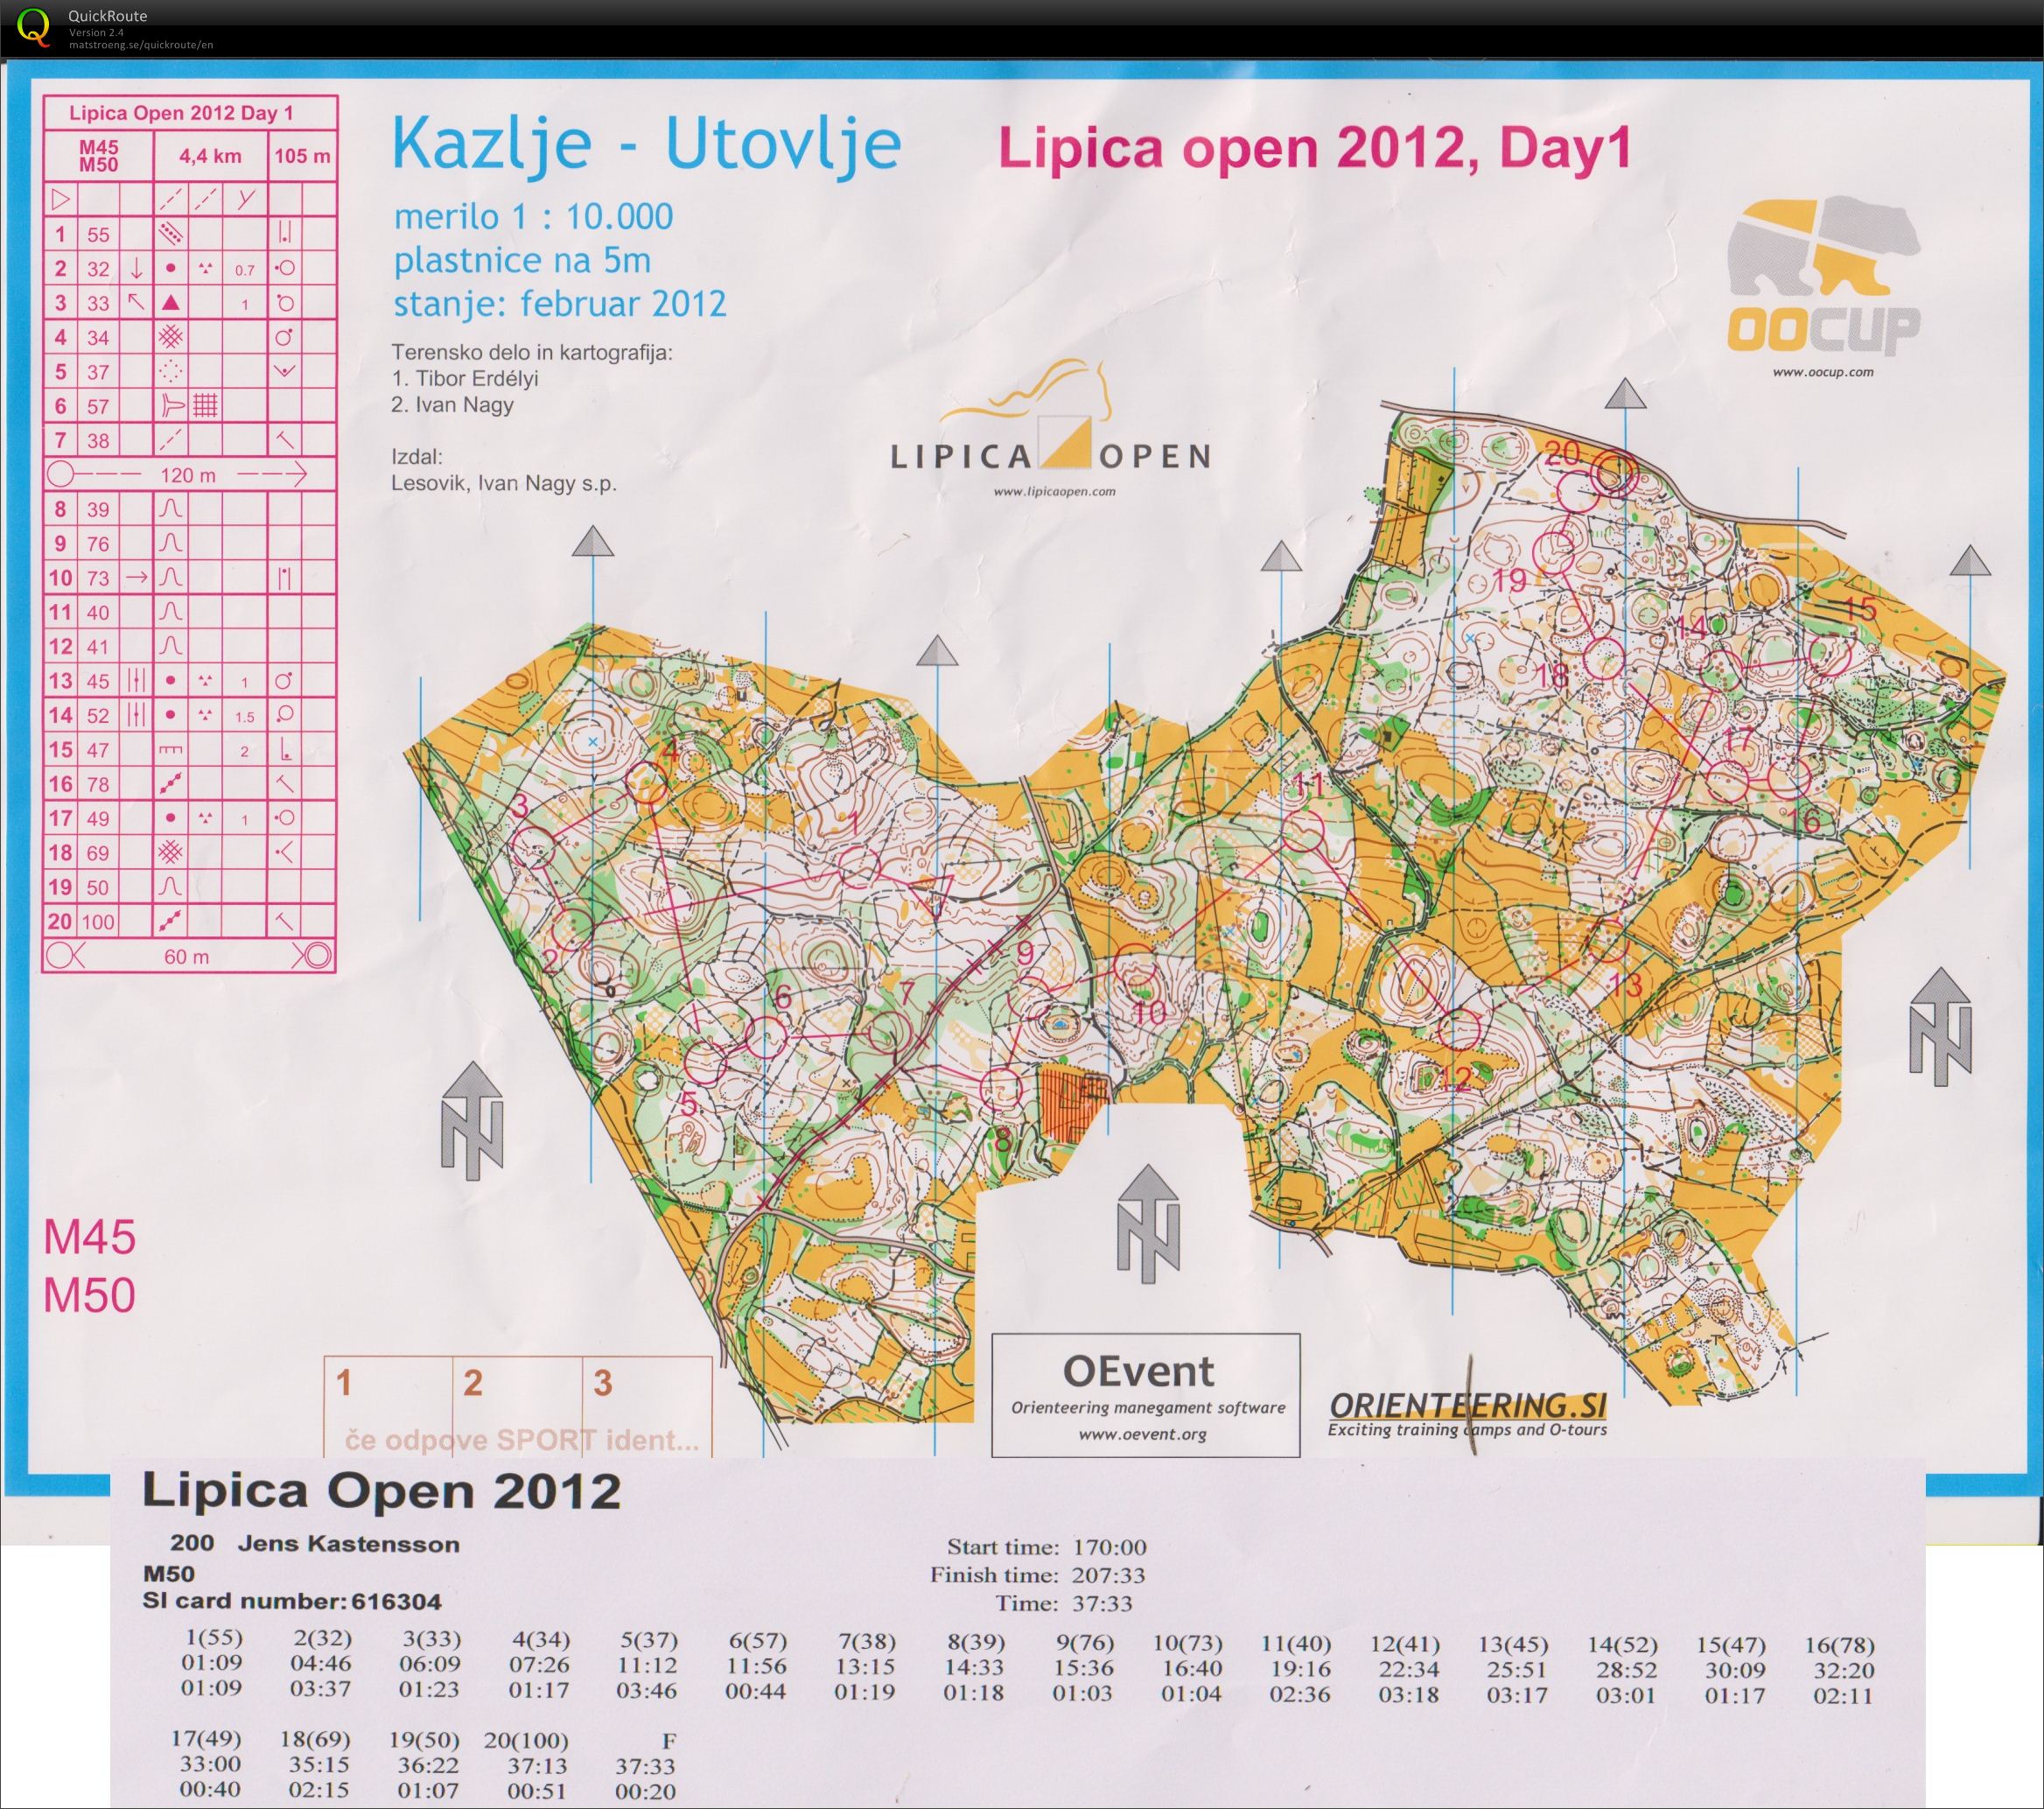 Lipica Open Day1 M50 (2012-03-10)